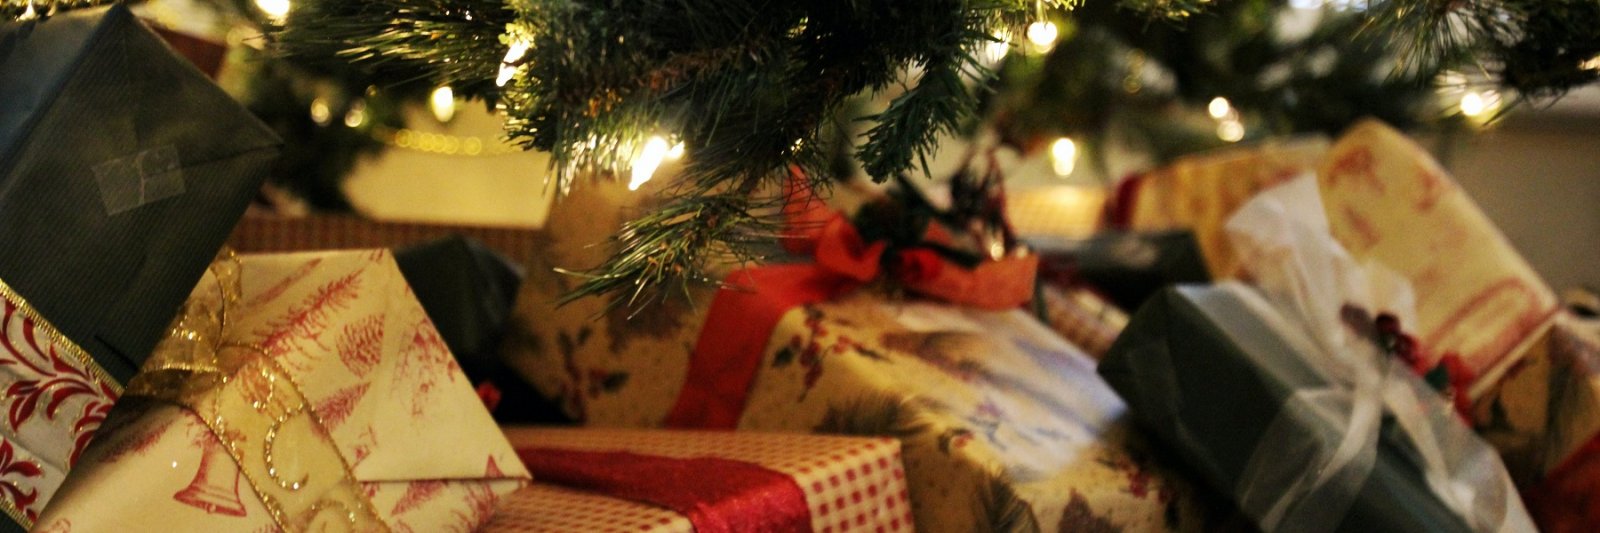 presents under Christmas tree